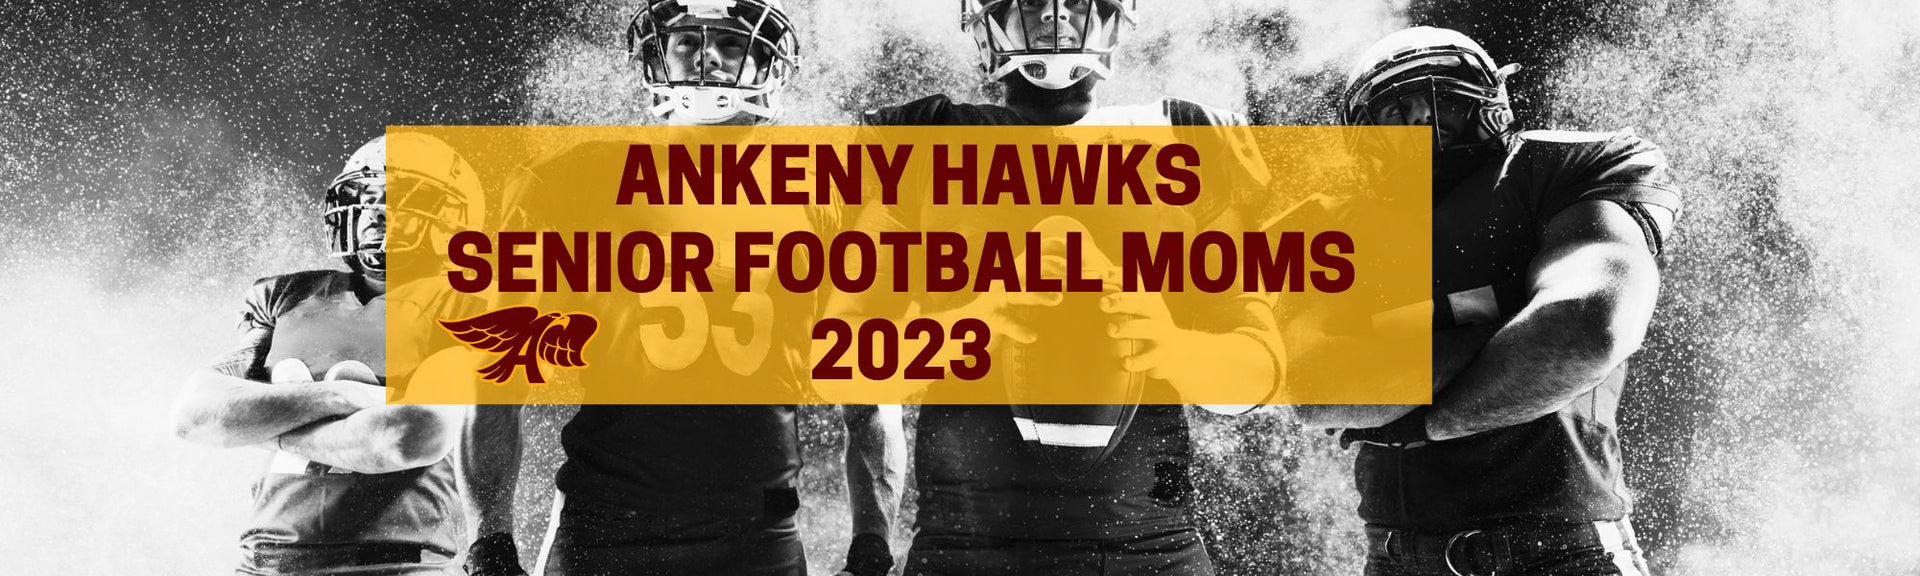 Ankeny Hawks Senior Football Moms 2023